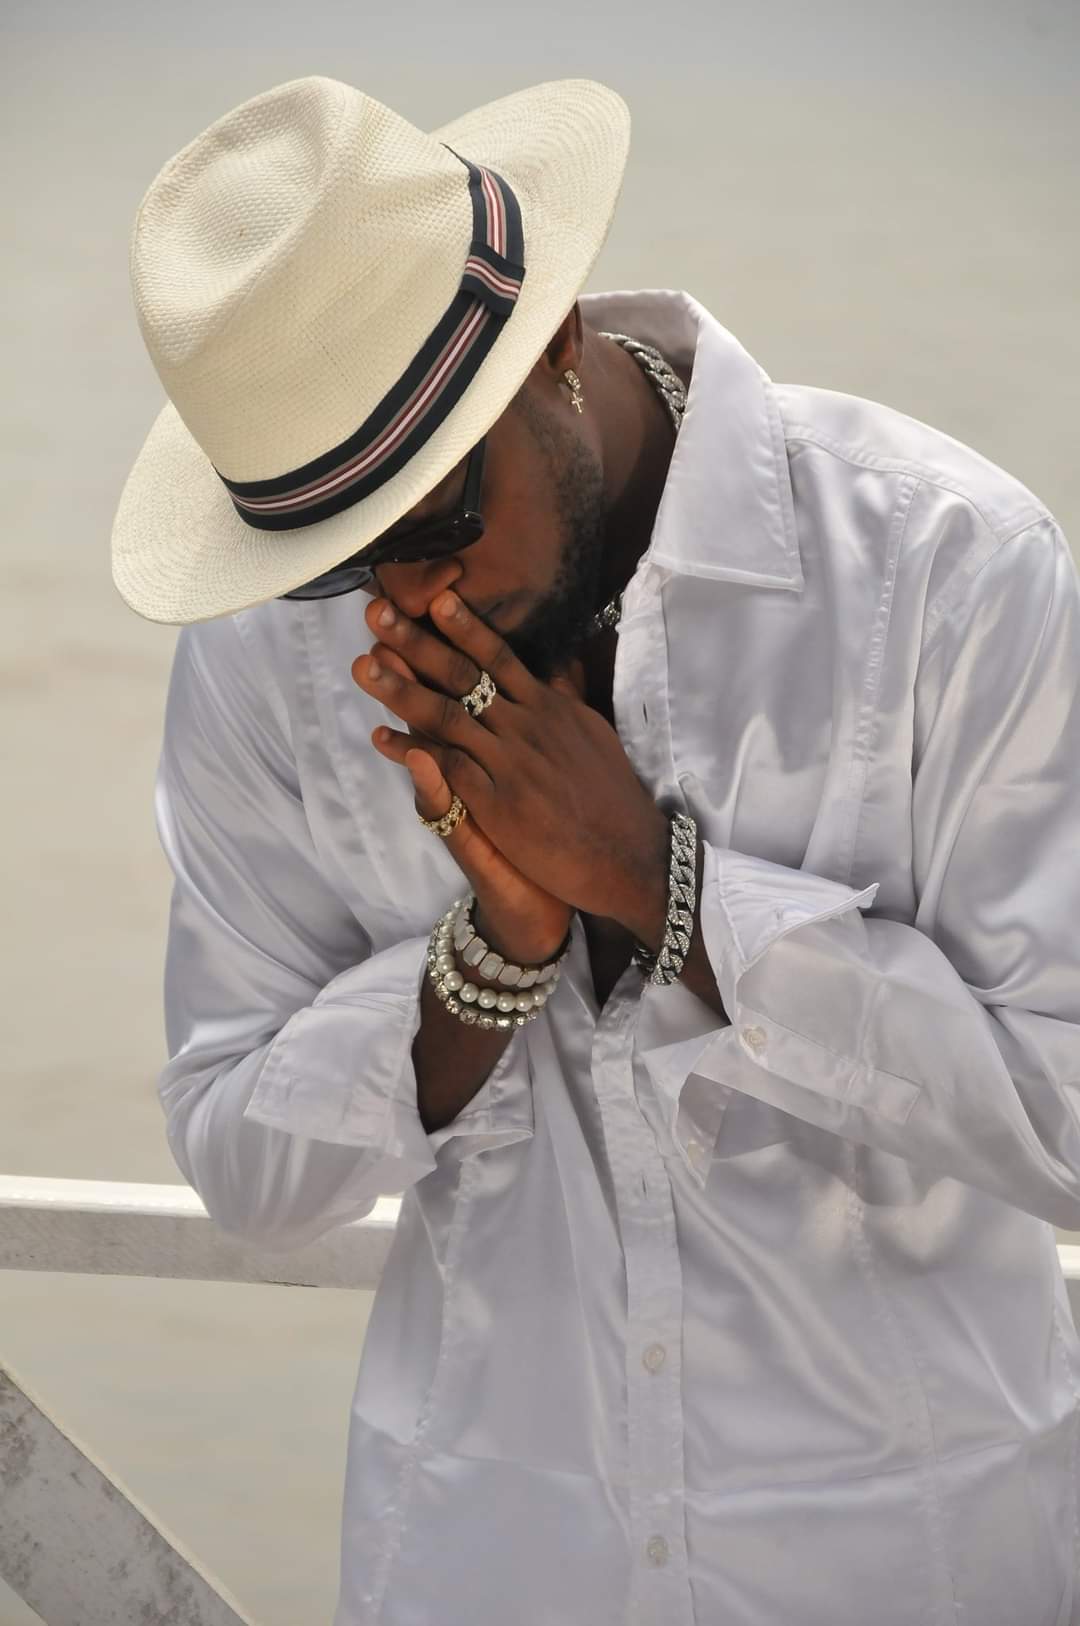 Salatiel, Cameroonian artist and music producer